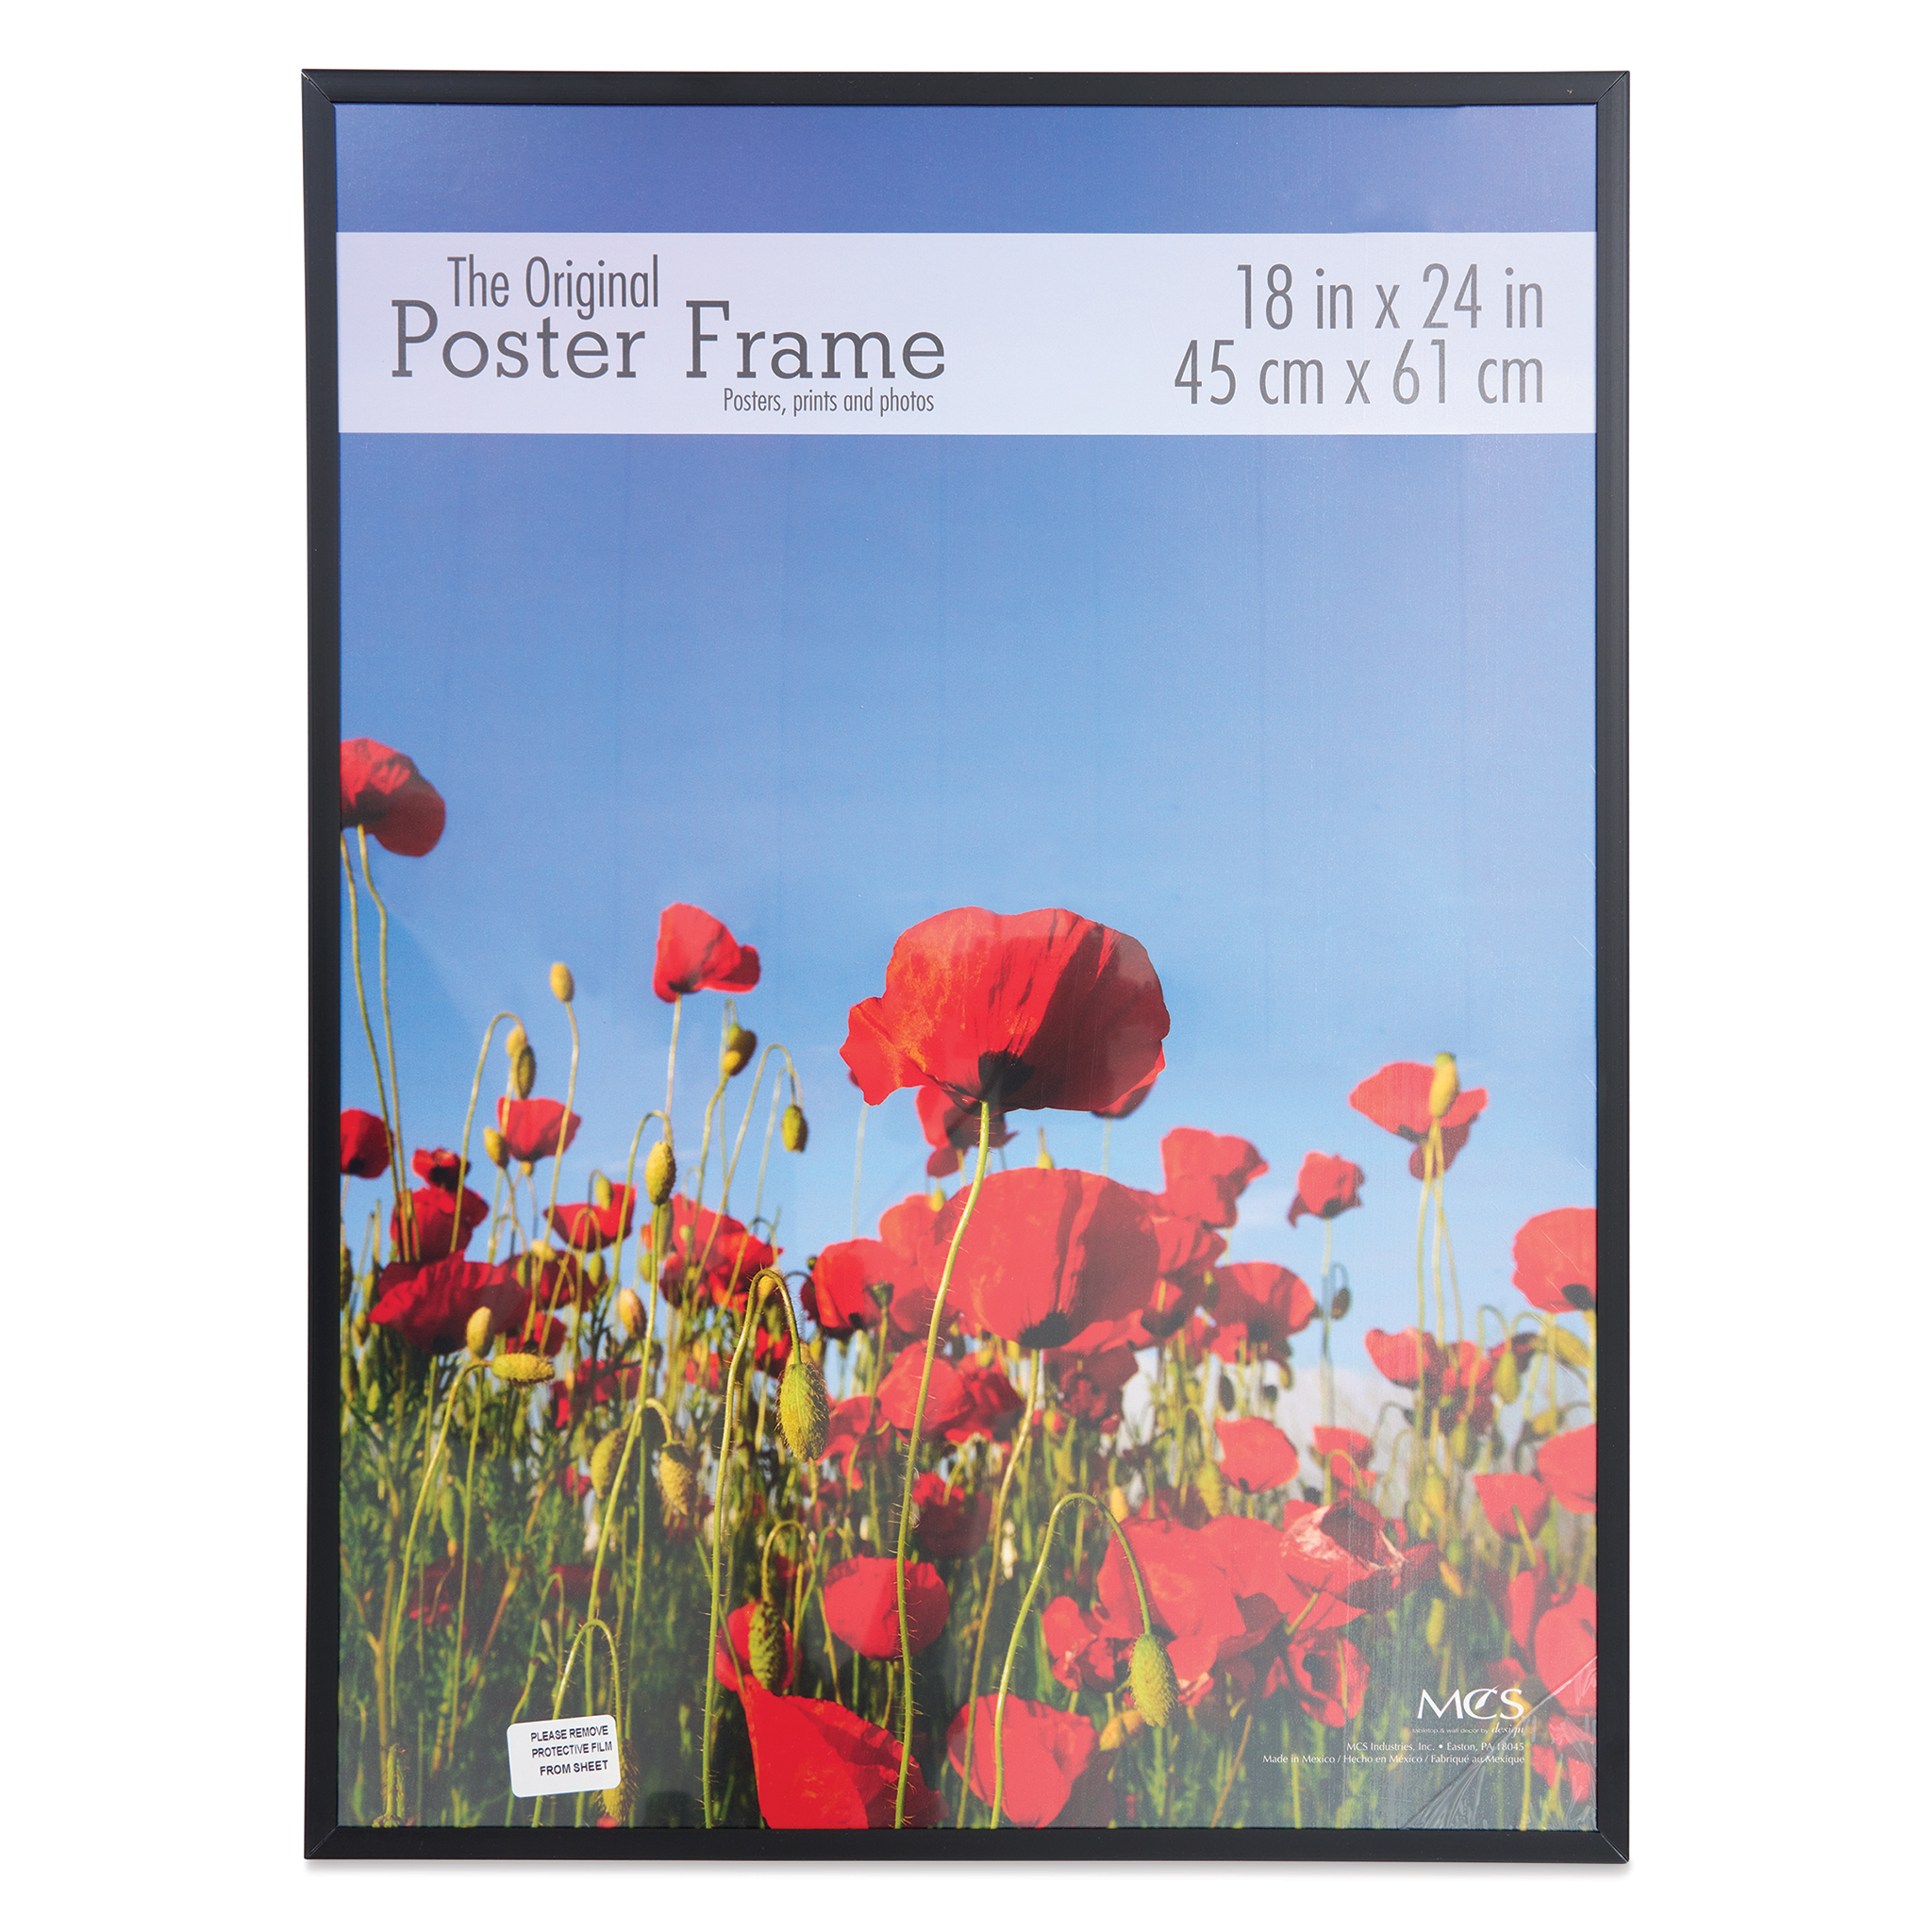 poster sized frames